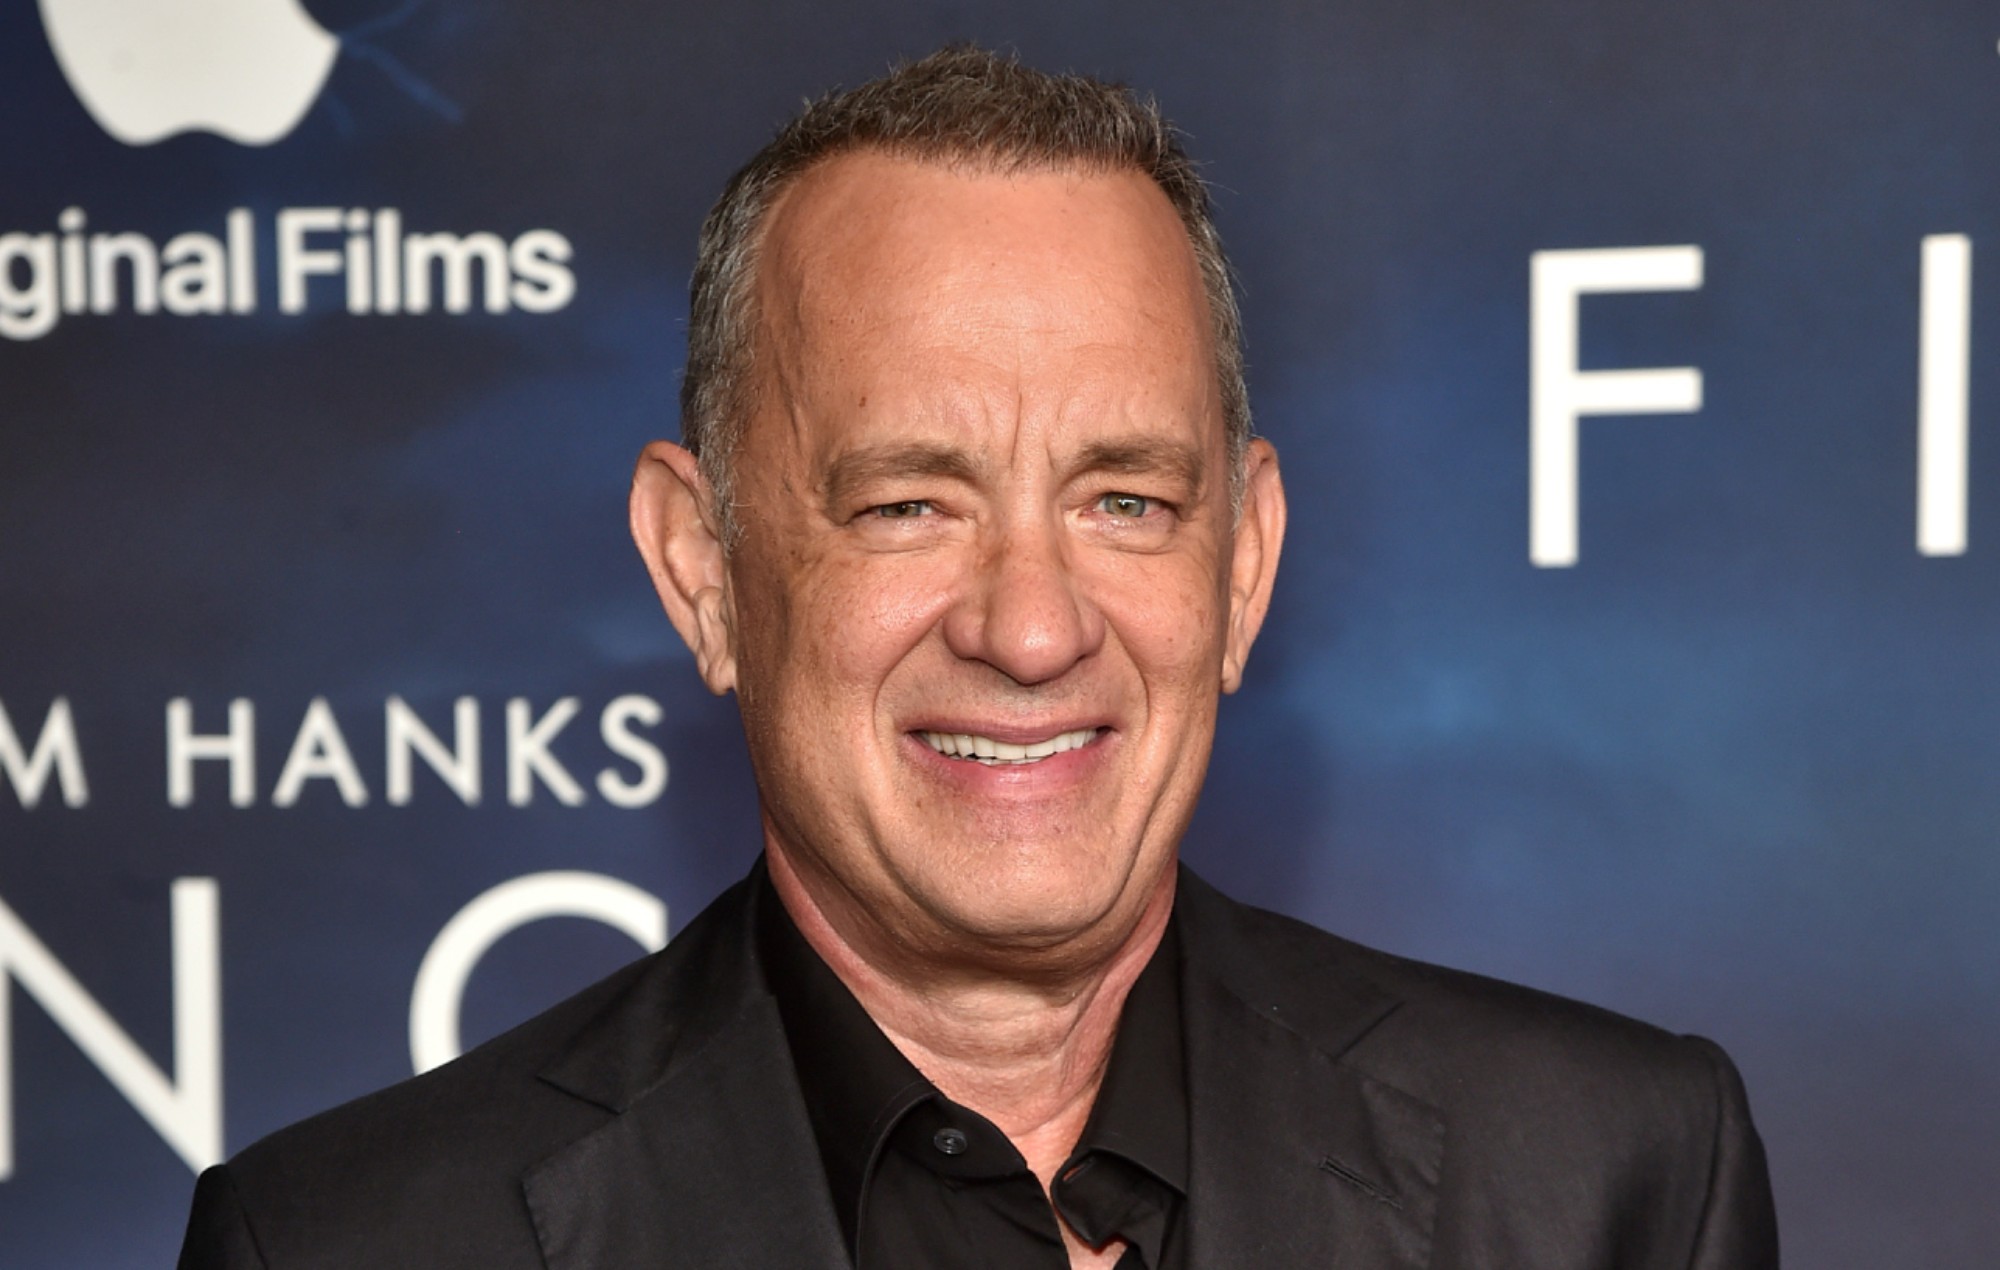 Tom Hanks boicotearía cualquier libro reescrito para reflejar "sensibilidades modernas"